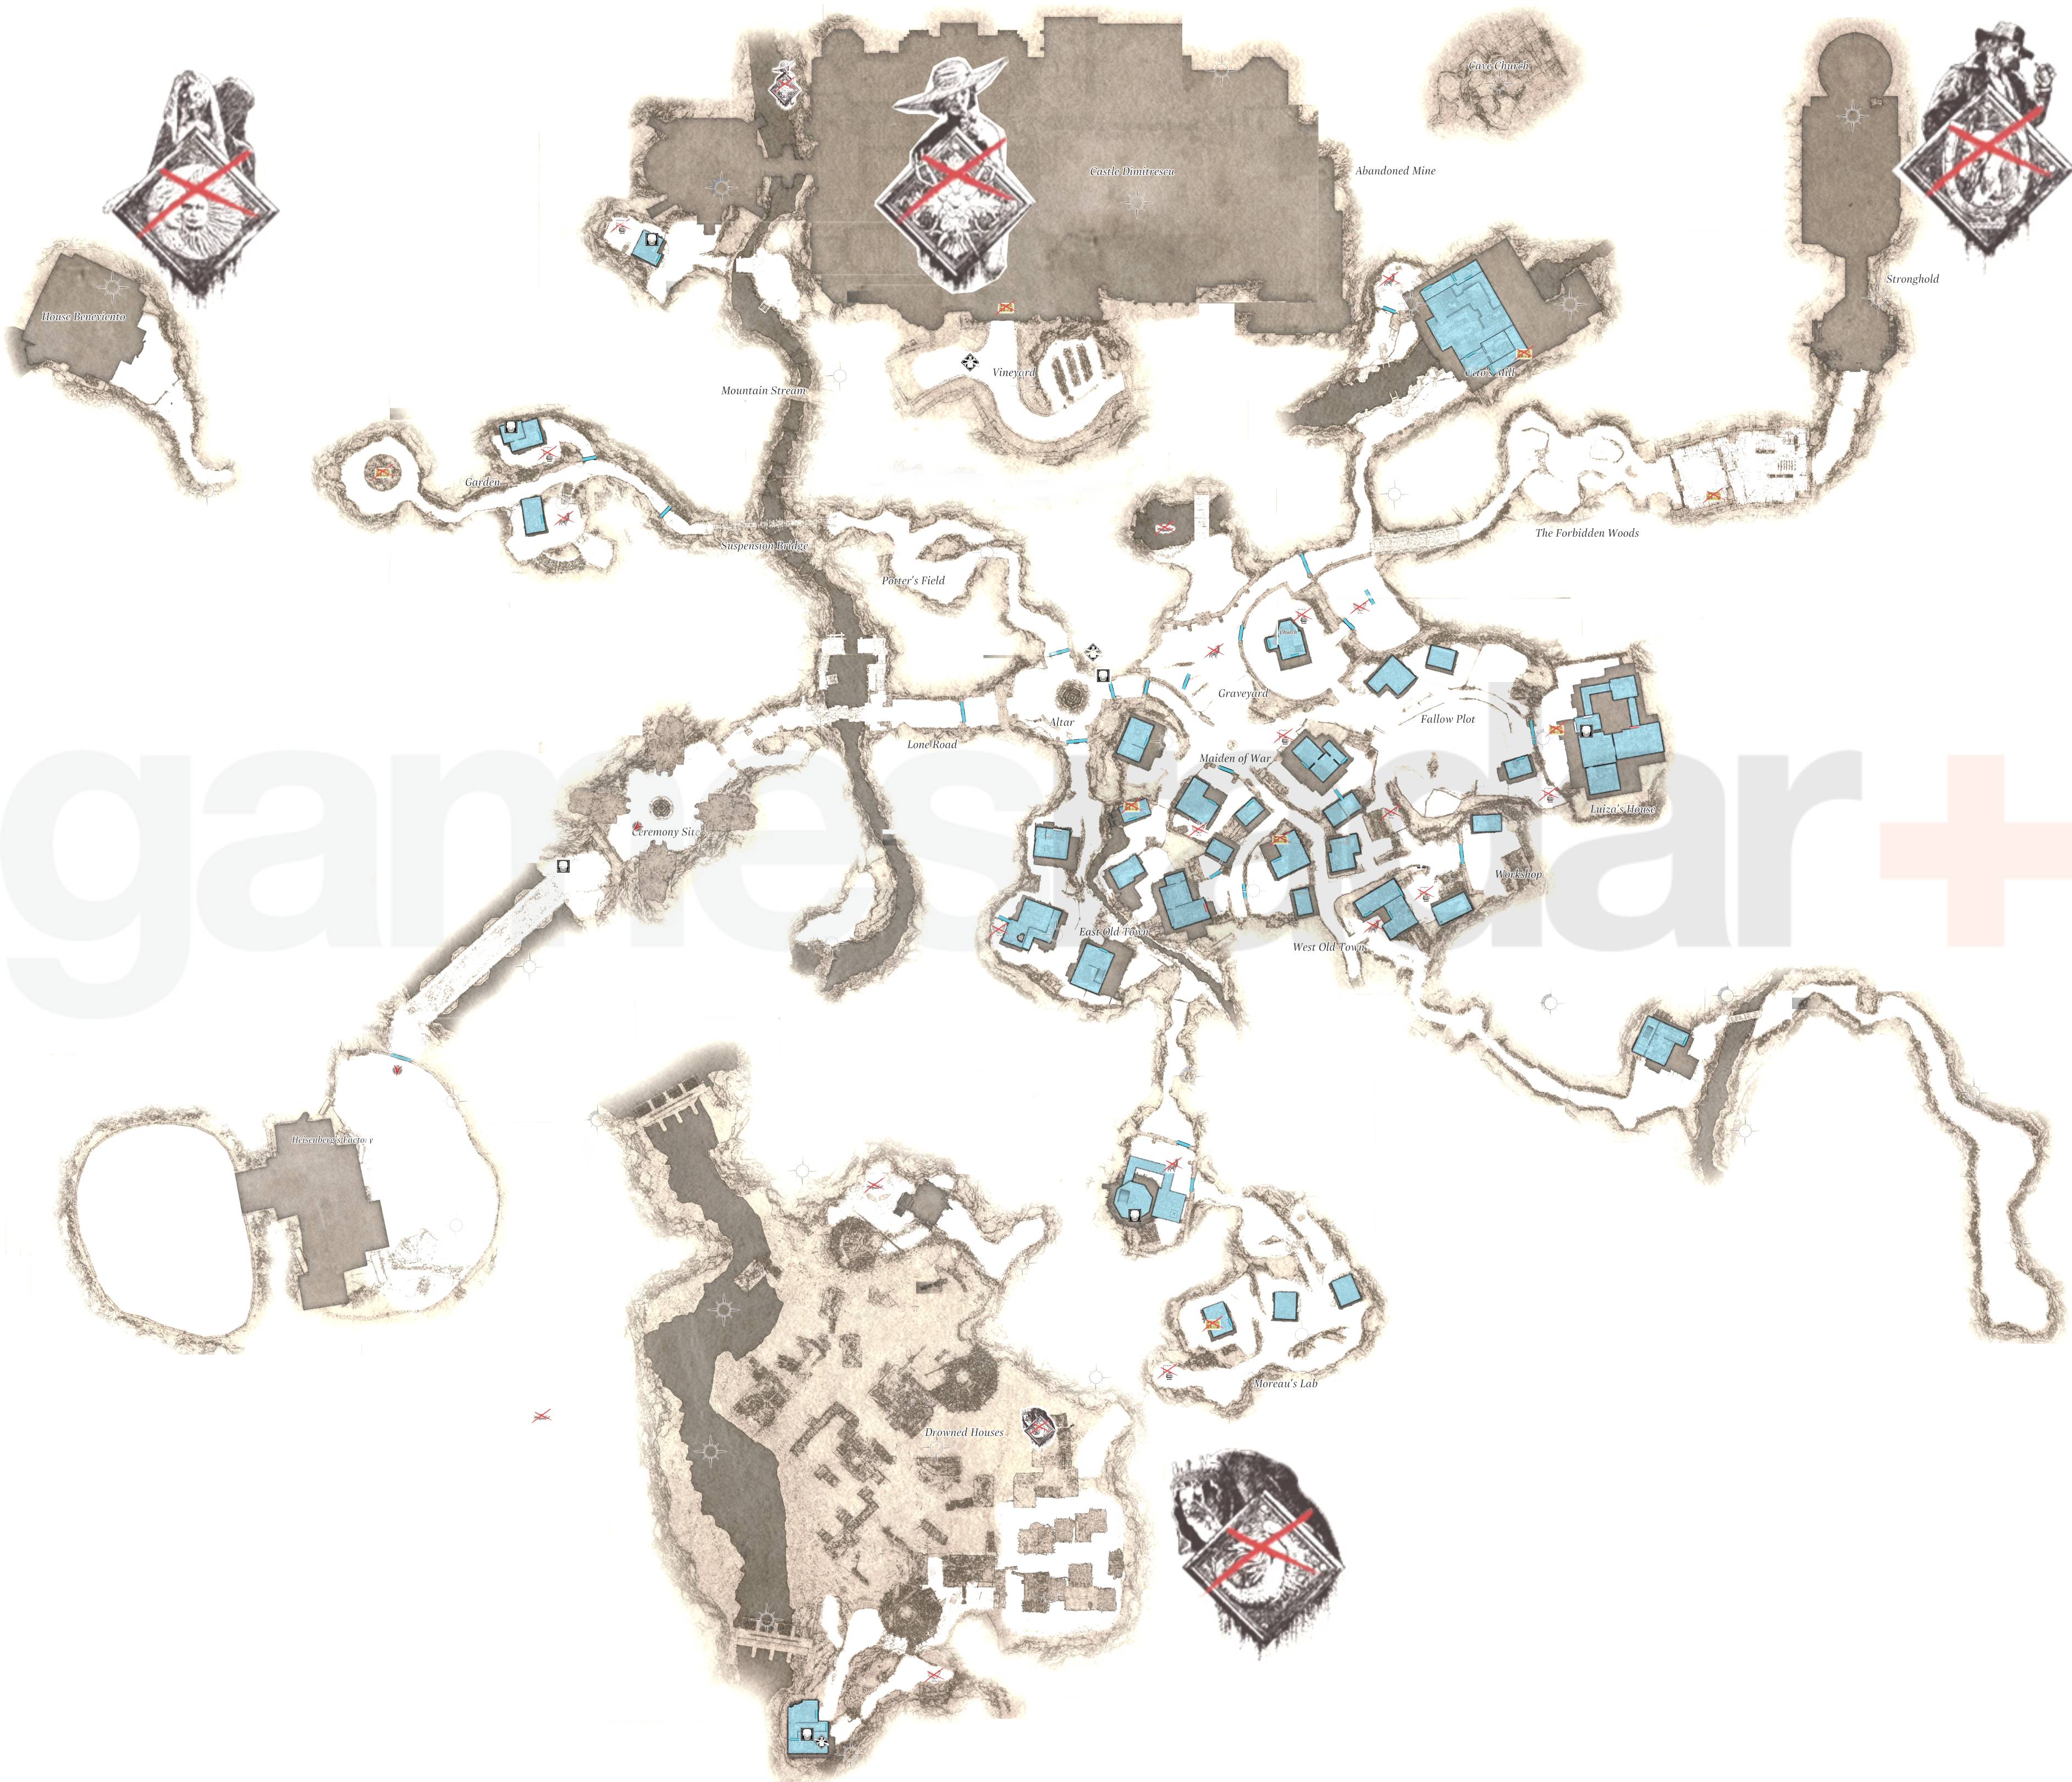 Resident evil 4 village map - strongasl